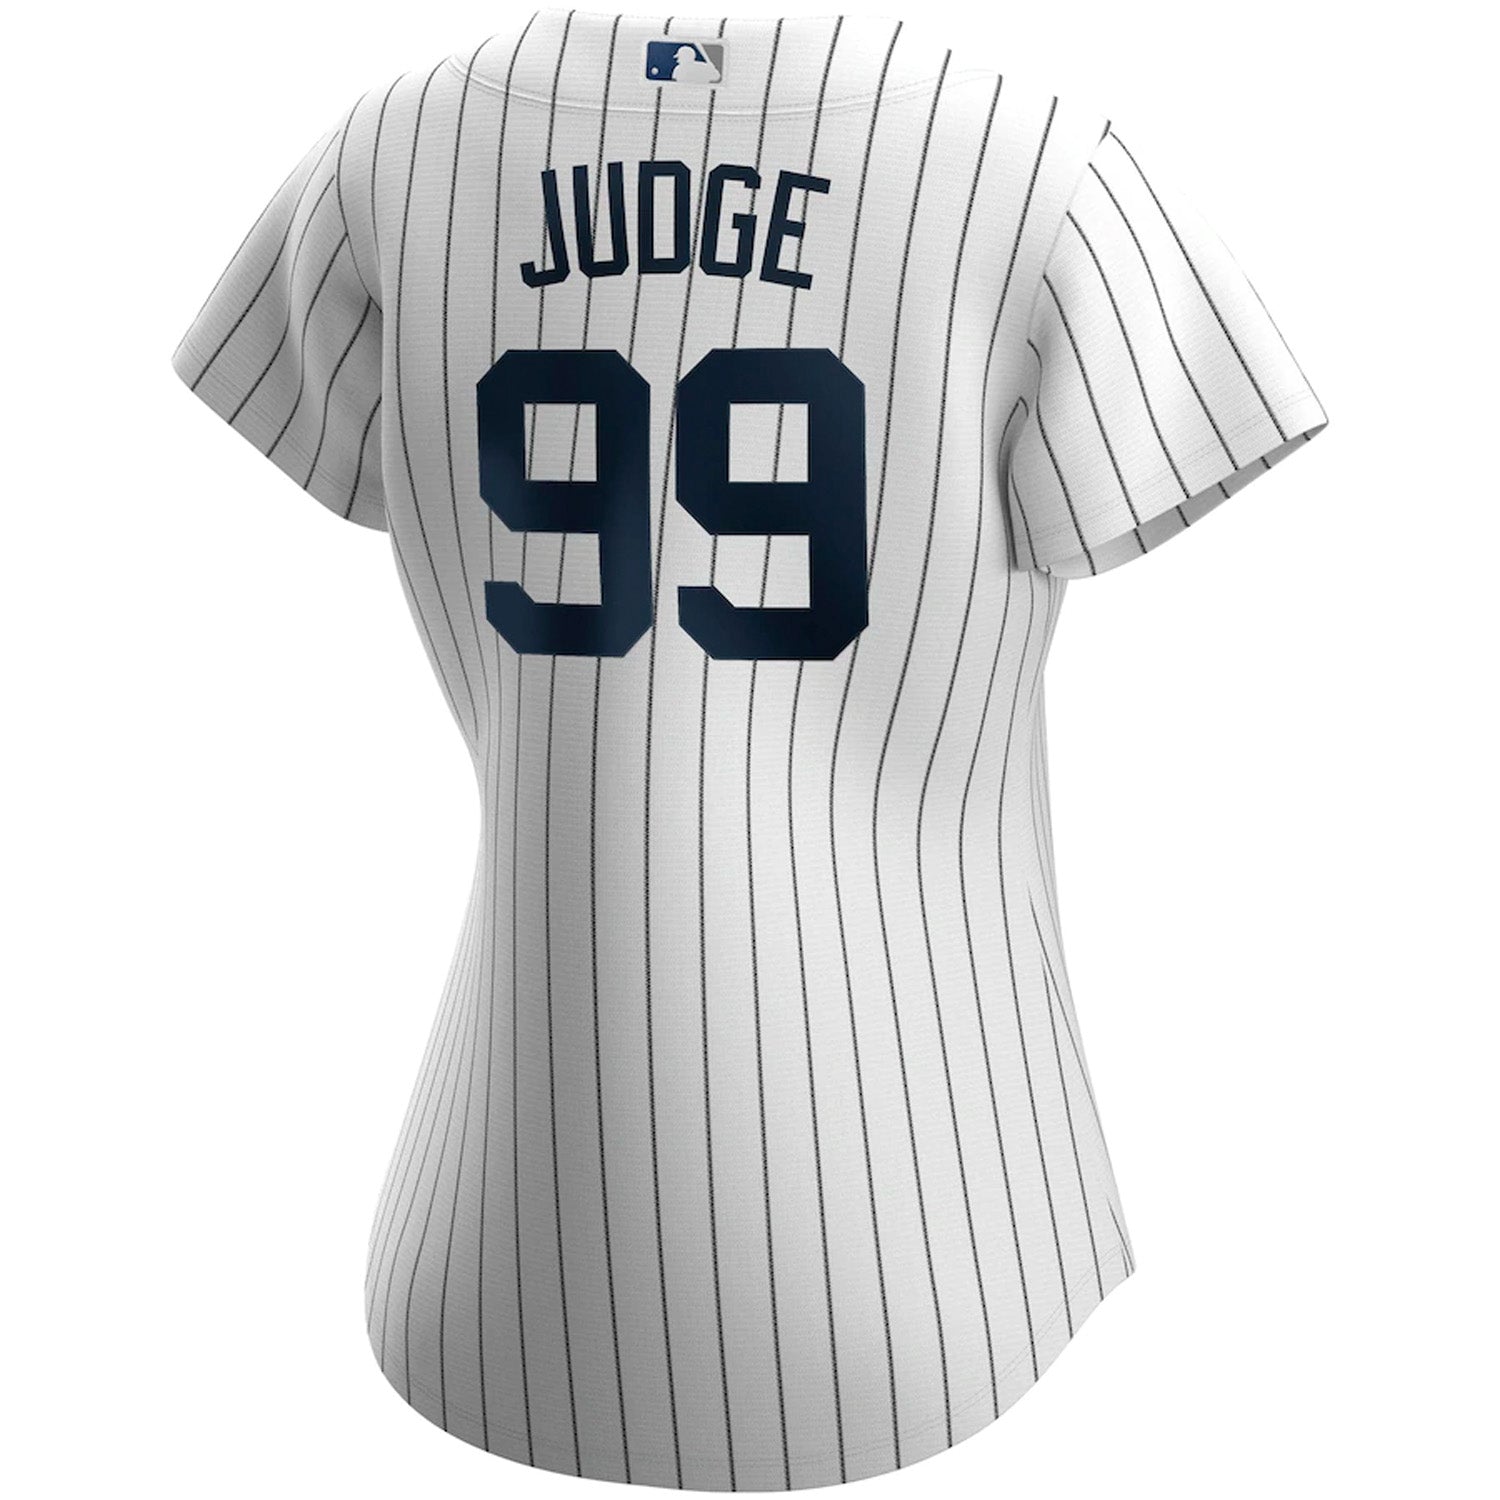 Profile Women's Aaron Judge White New York Yankees Plus Size Replica Player Jersey Size: 2XL